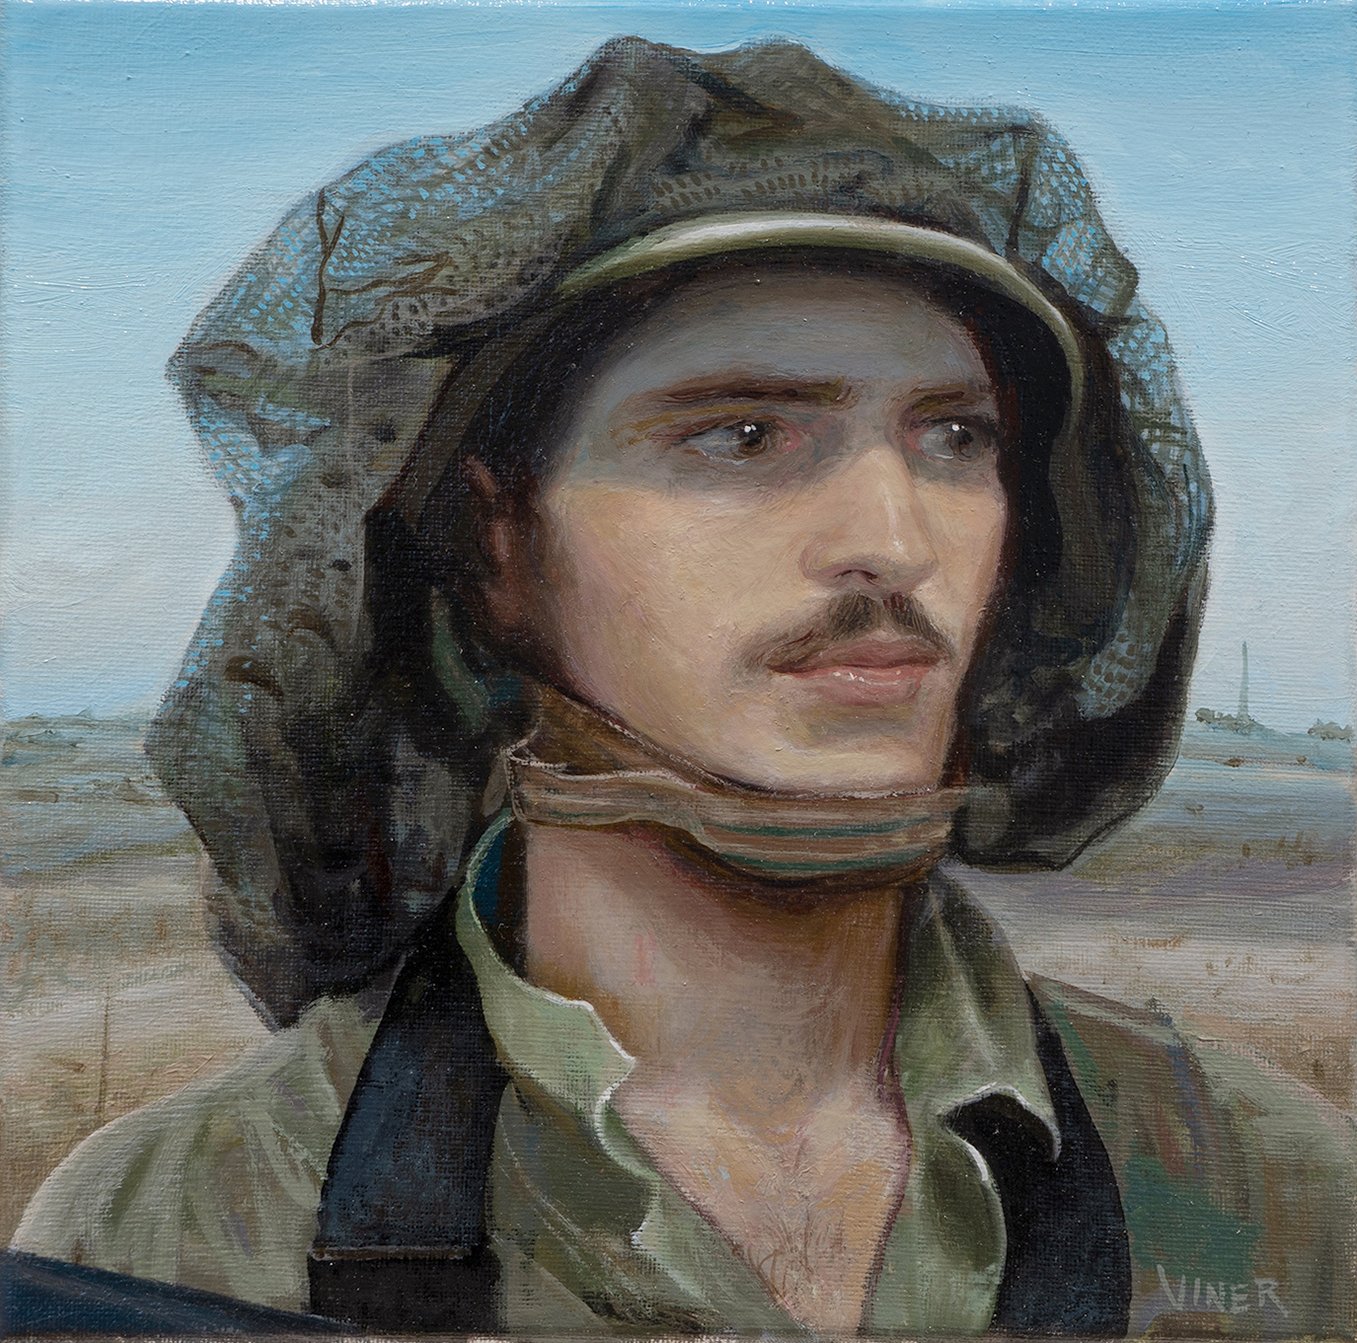 Israeli Soldier With Mustache